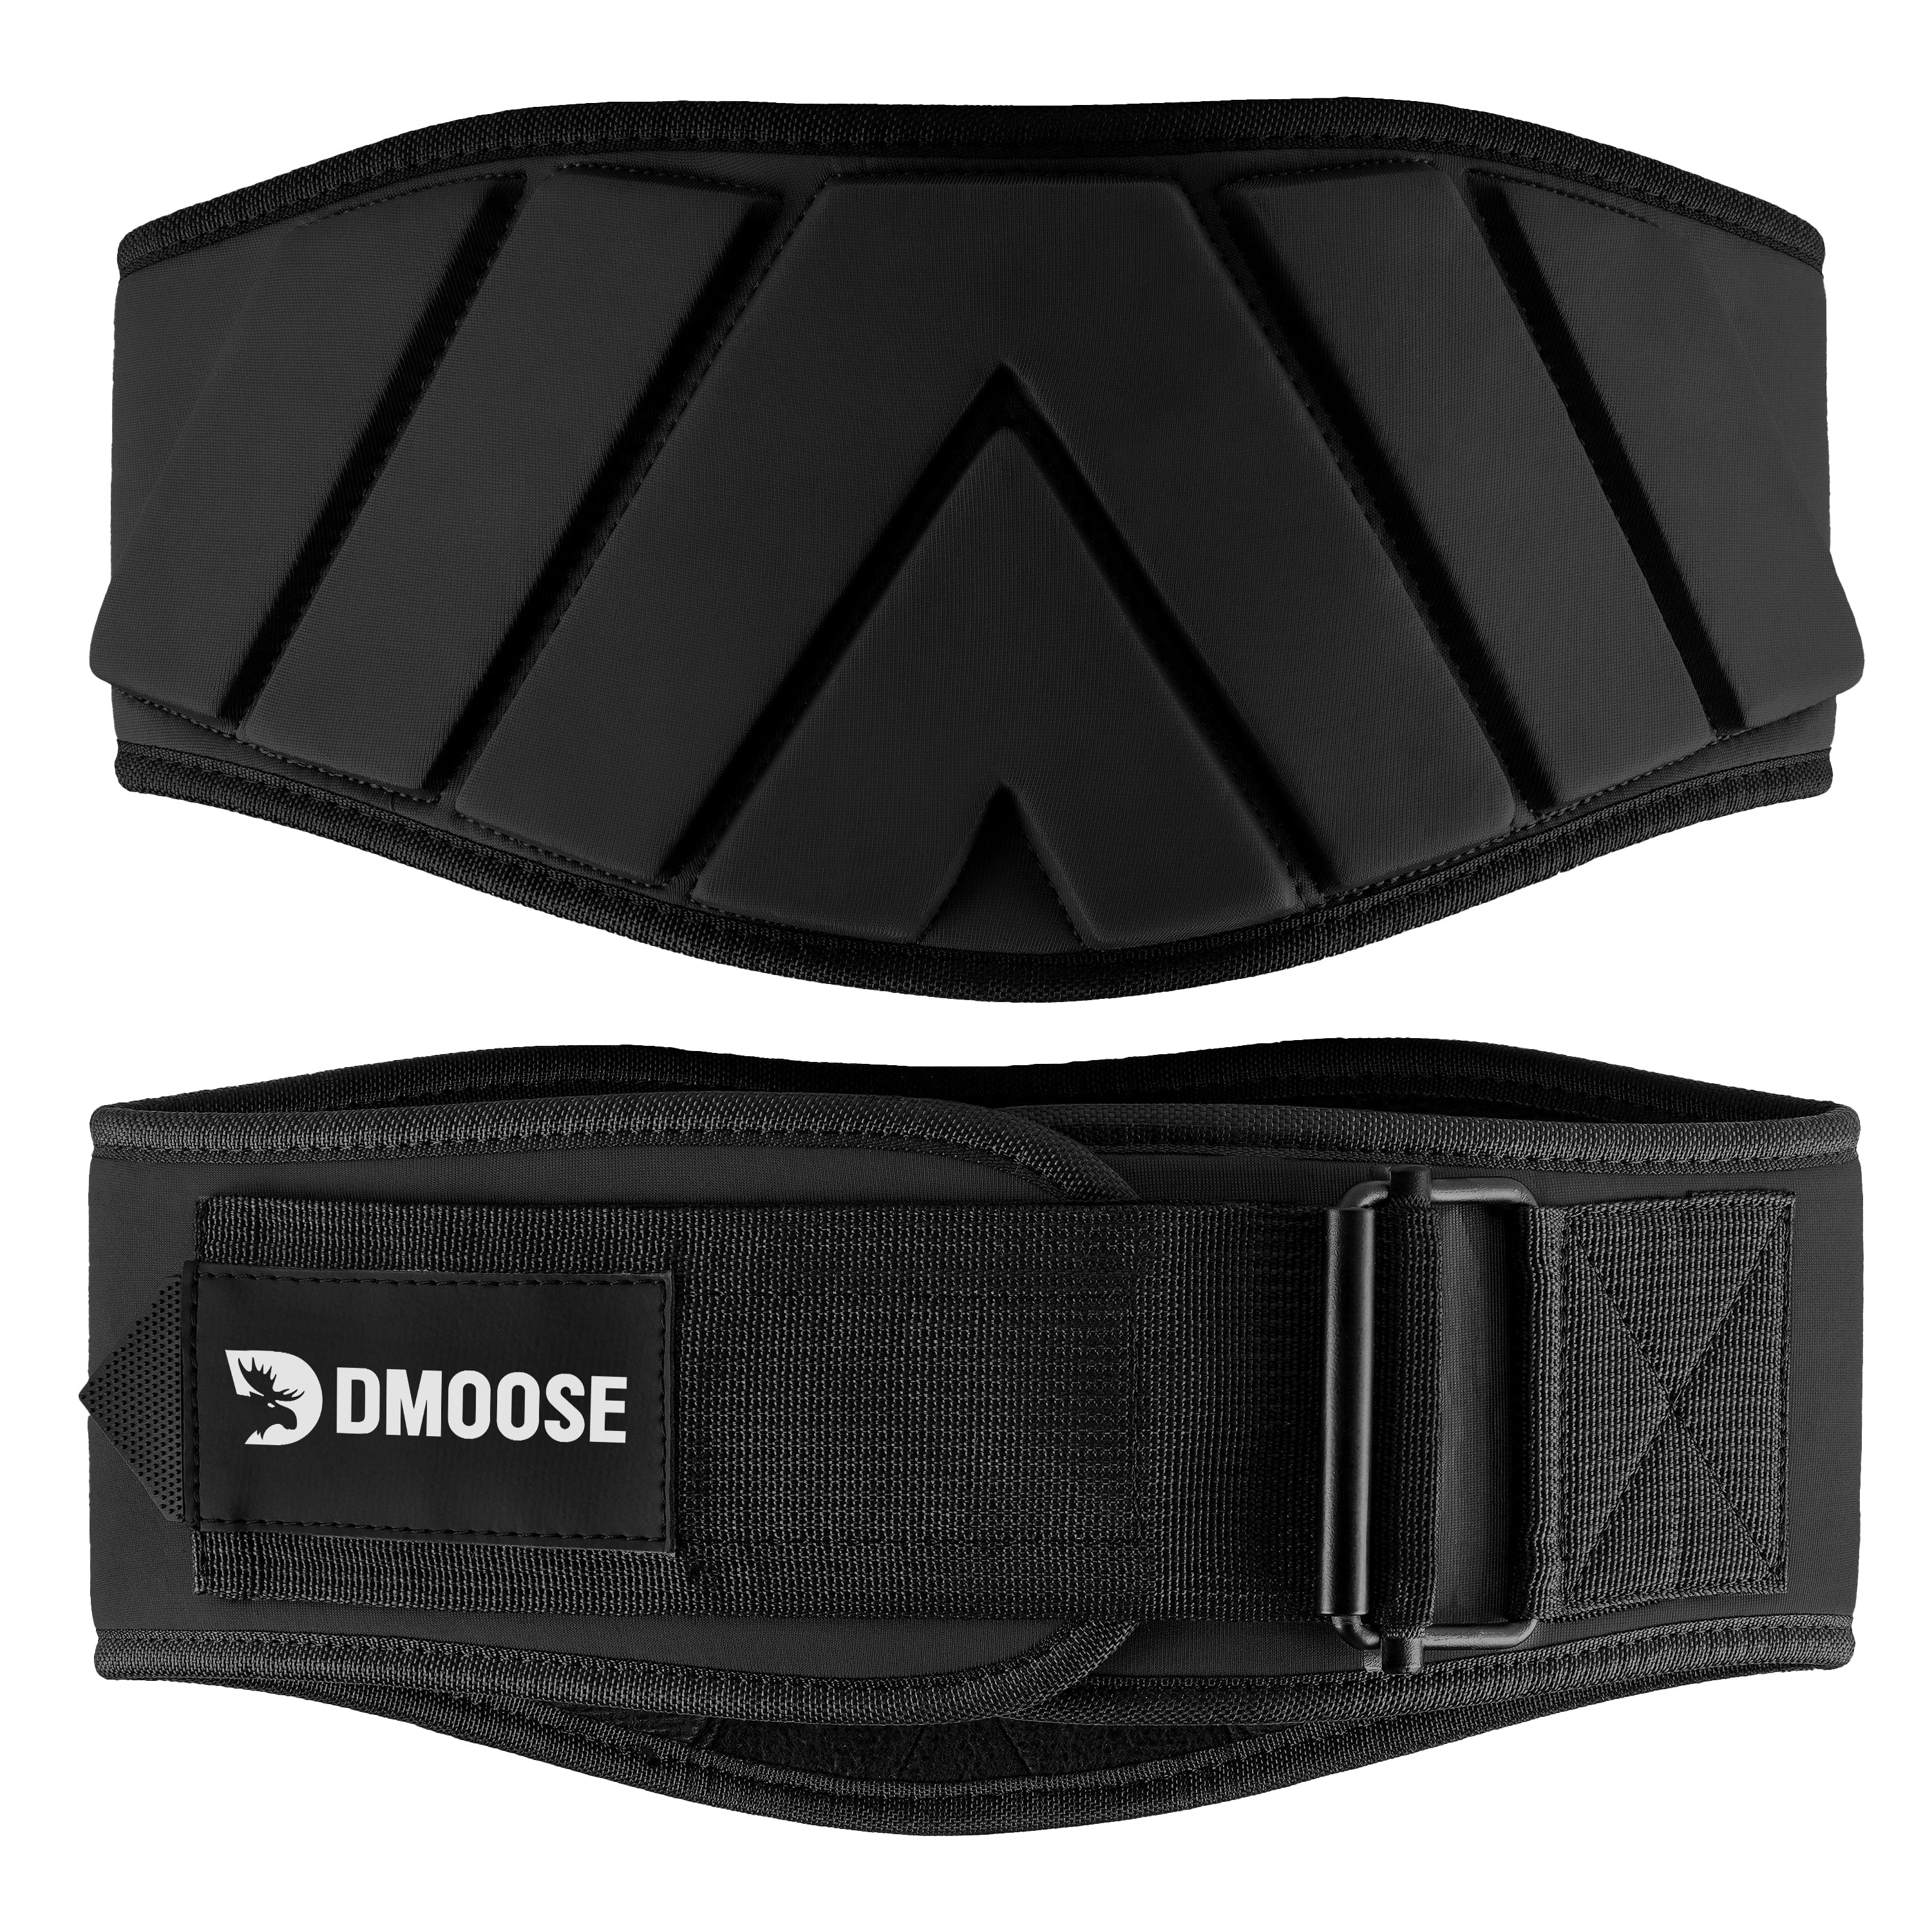 SideDeal: Body Glove Slimming Velcro Belt